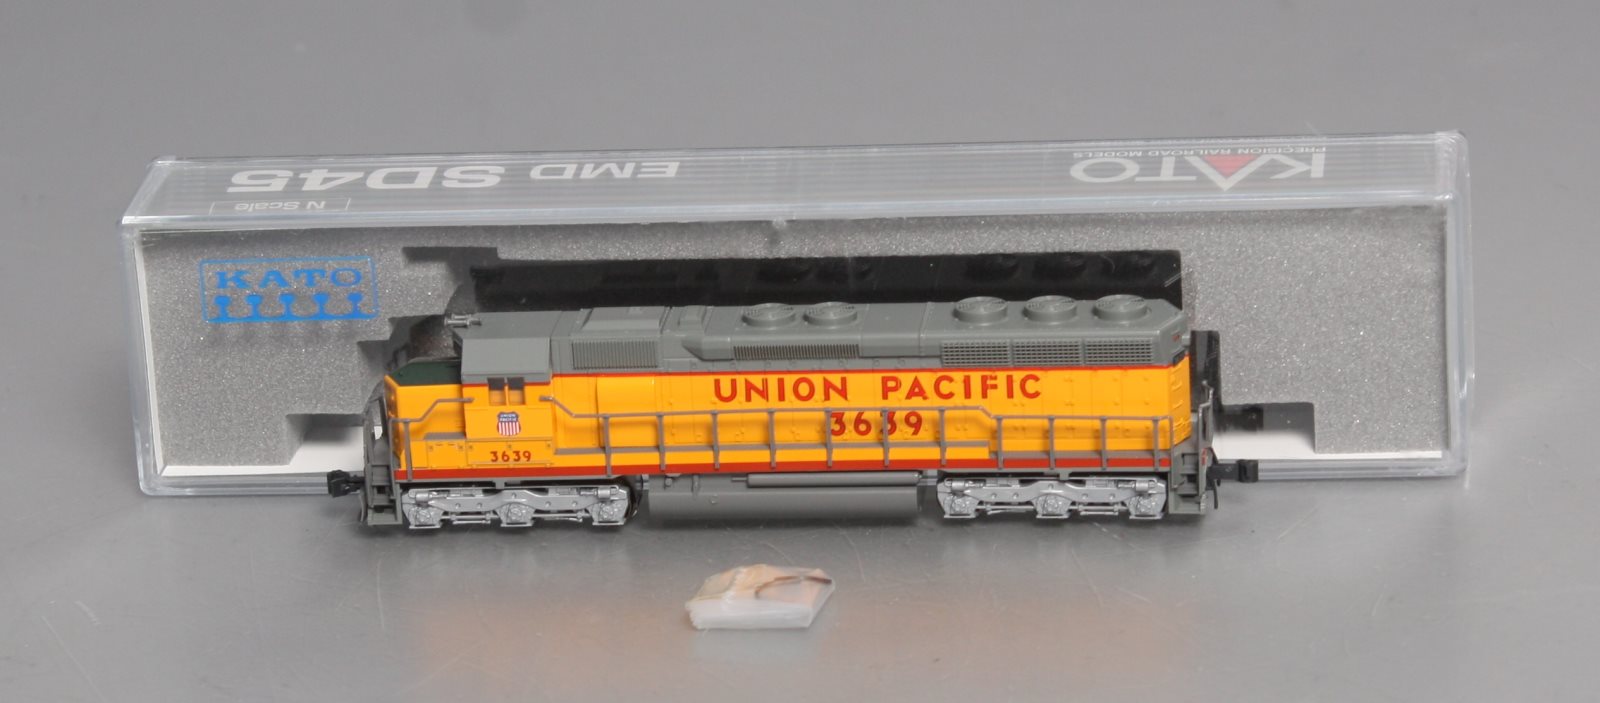 Kato 176-3134 N Scale Union Pacific SD45 Diesel Locomotive #3639